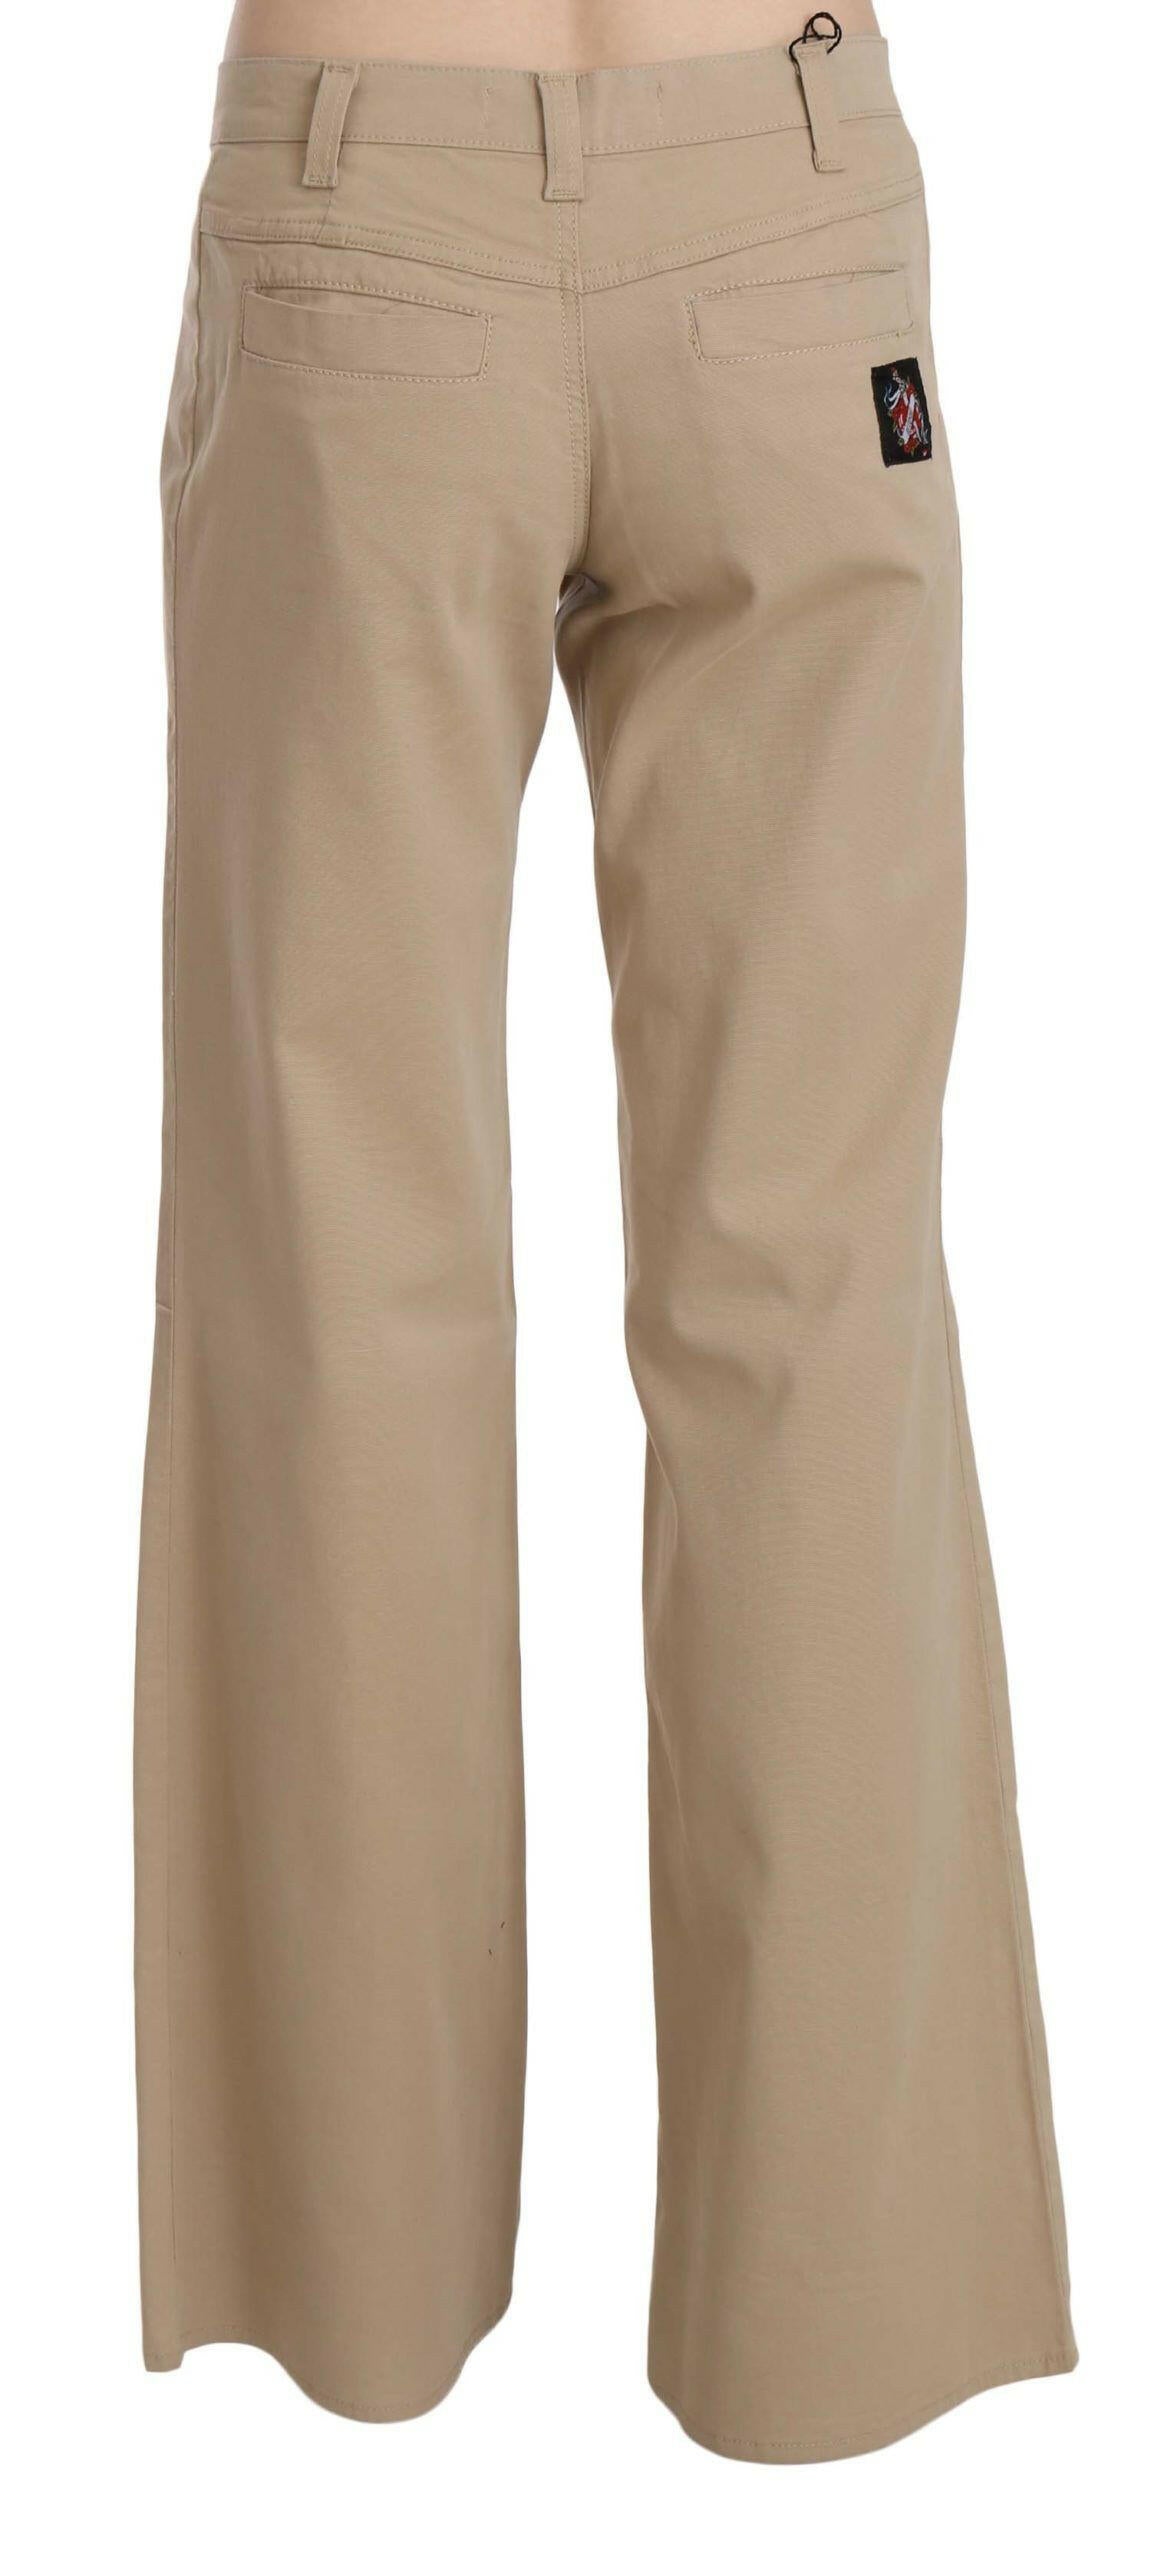 Just Cavalli Beige Cotton Mid Waist Flared Trousers Pants - GENUINE AUTHENTIC BRAND LLC  